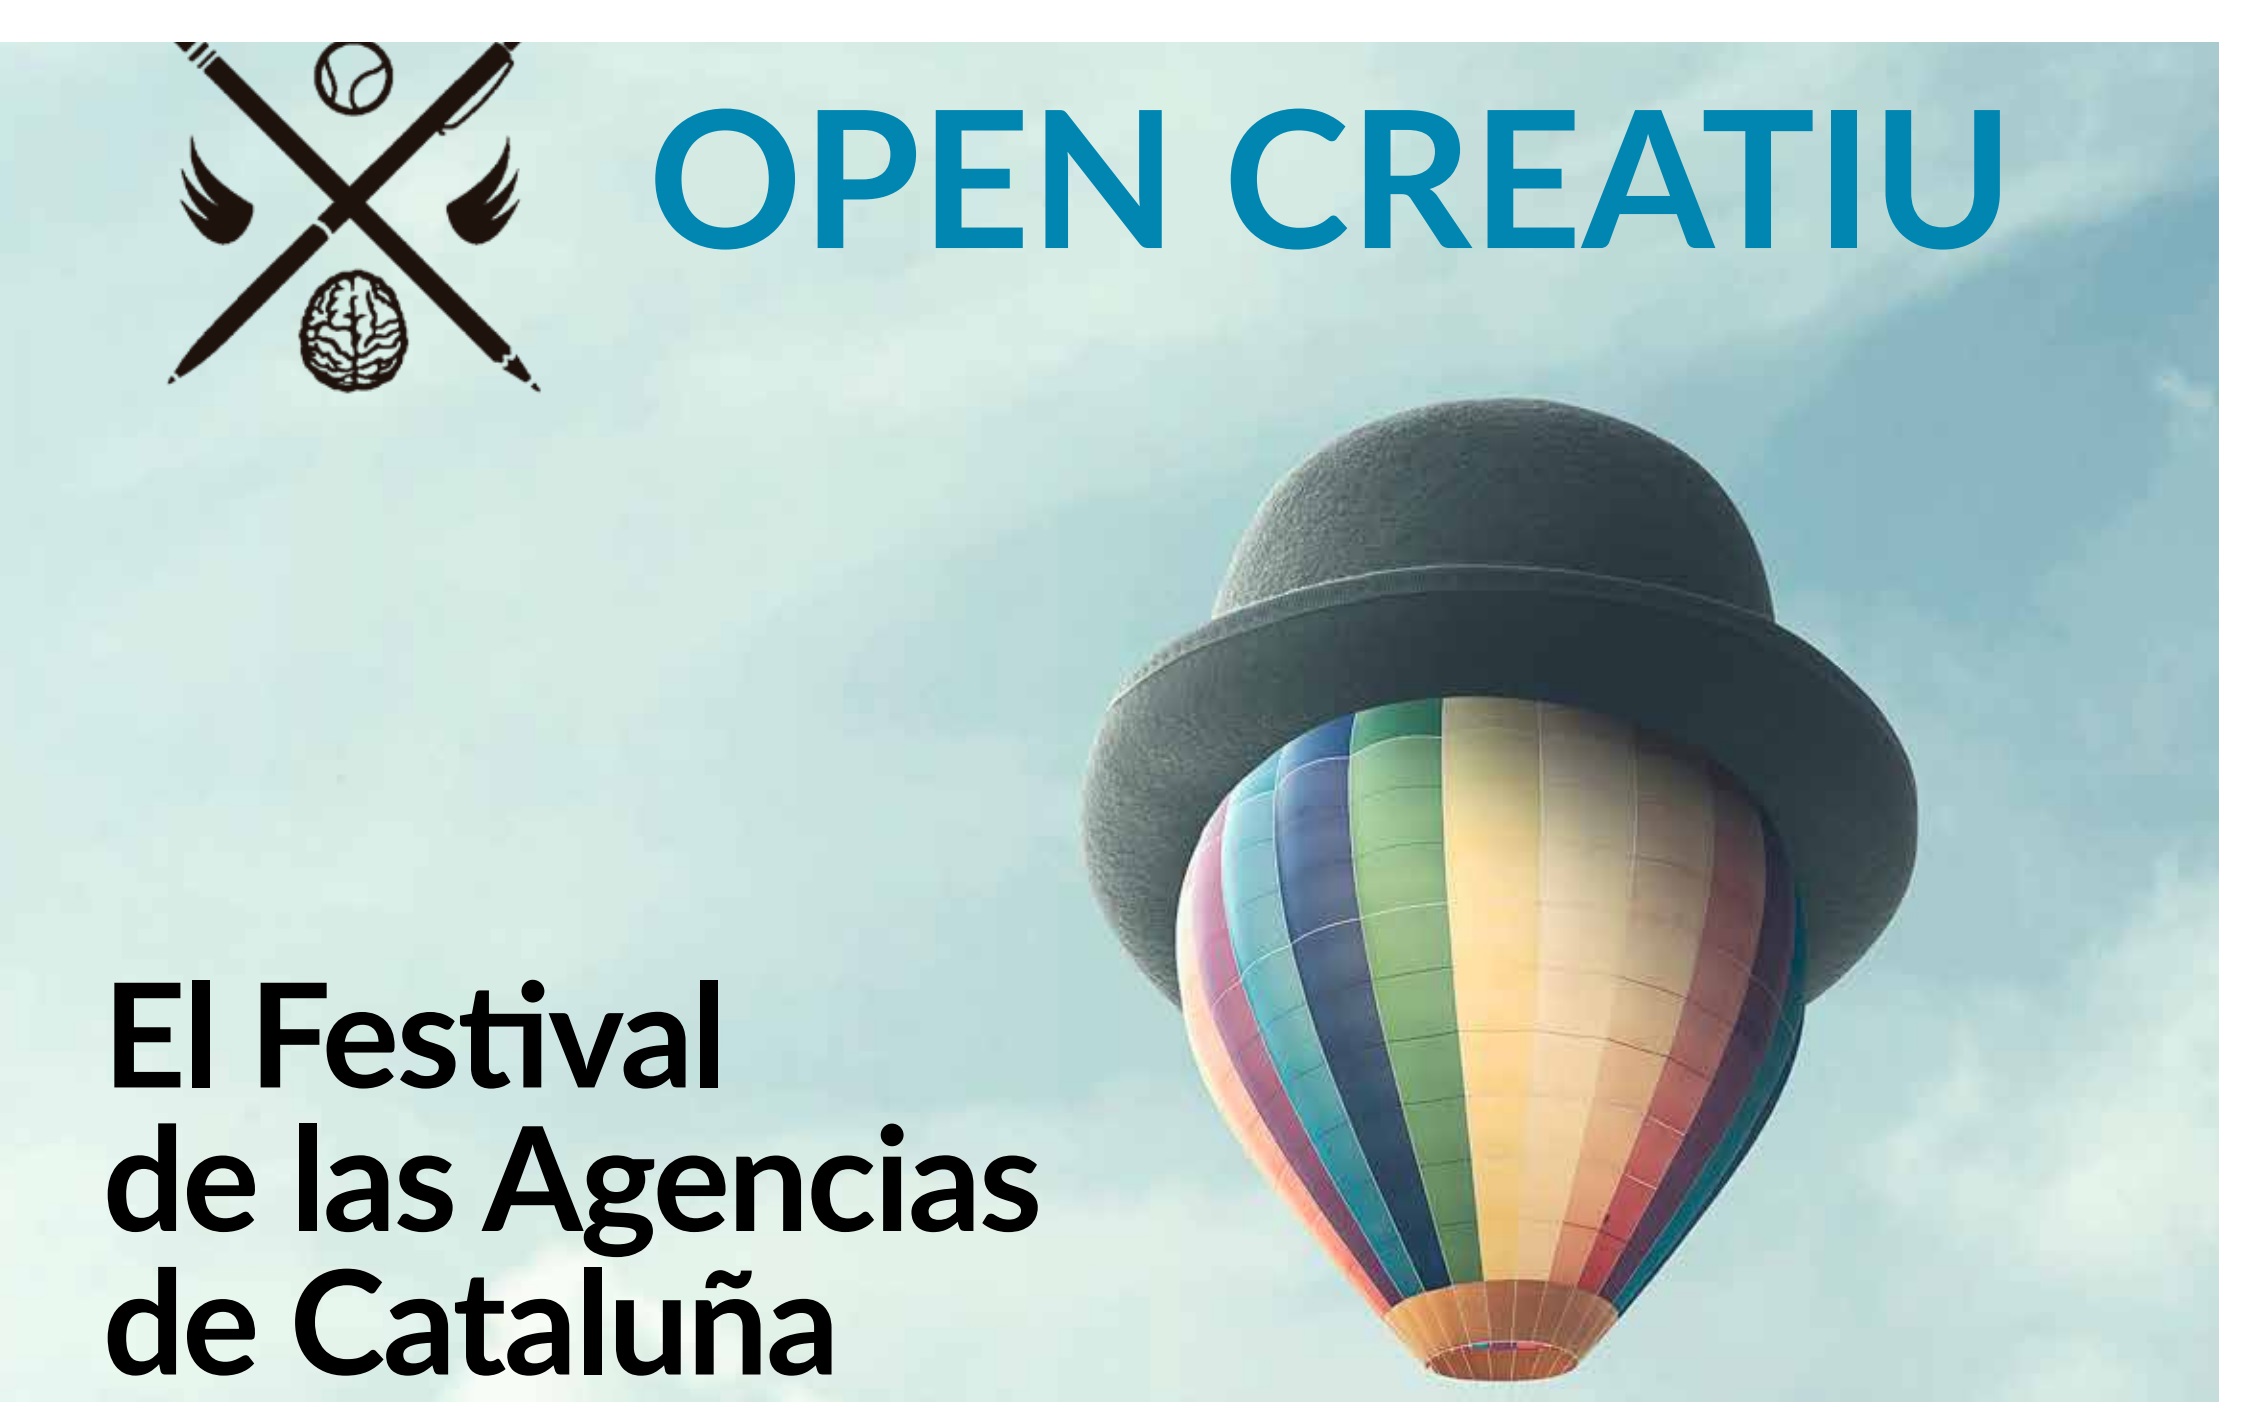 open creatiu, festival agencias, cataluña, programapublicidad,